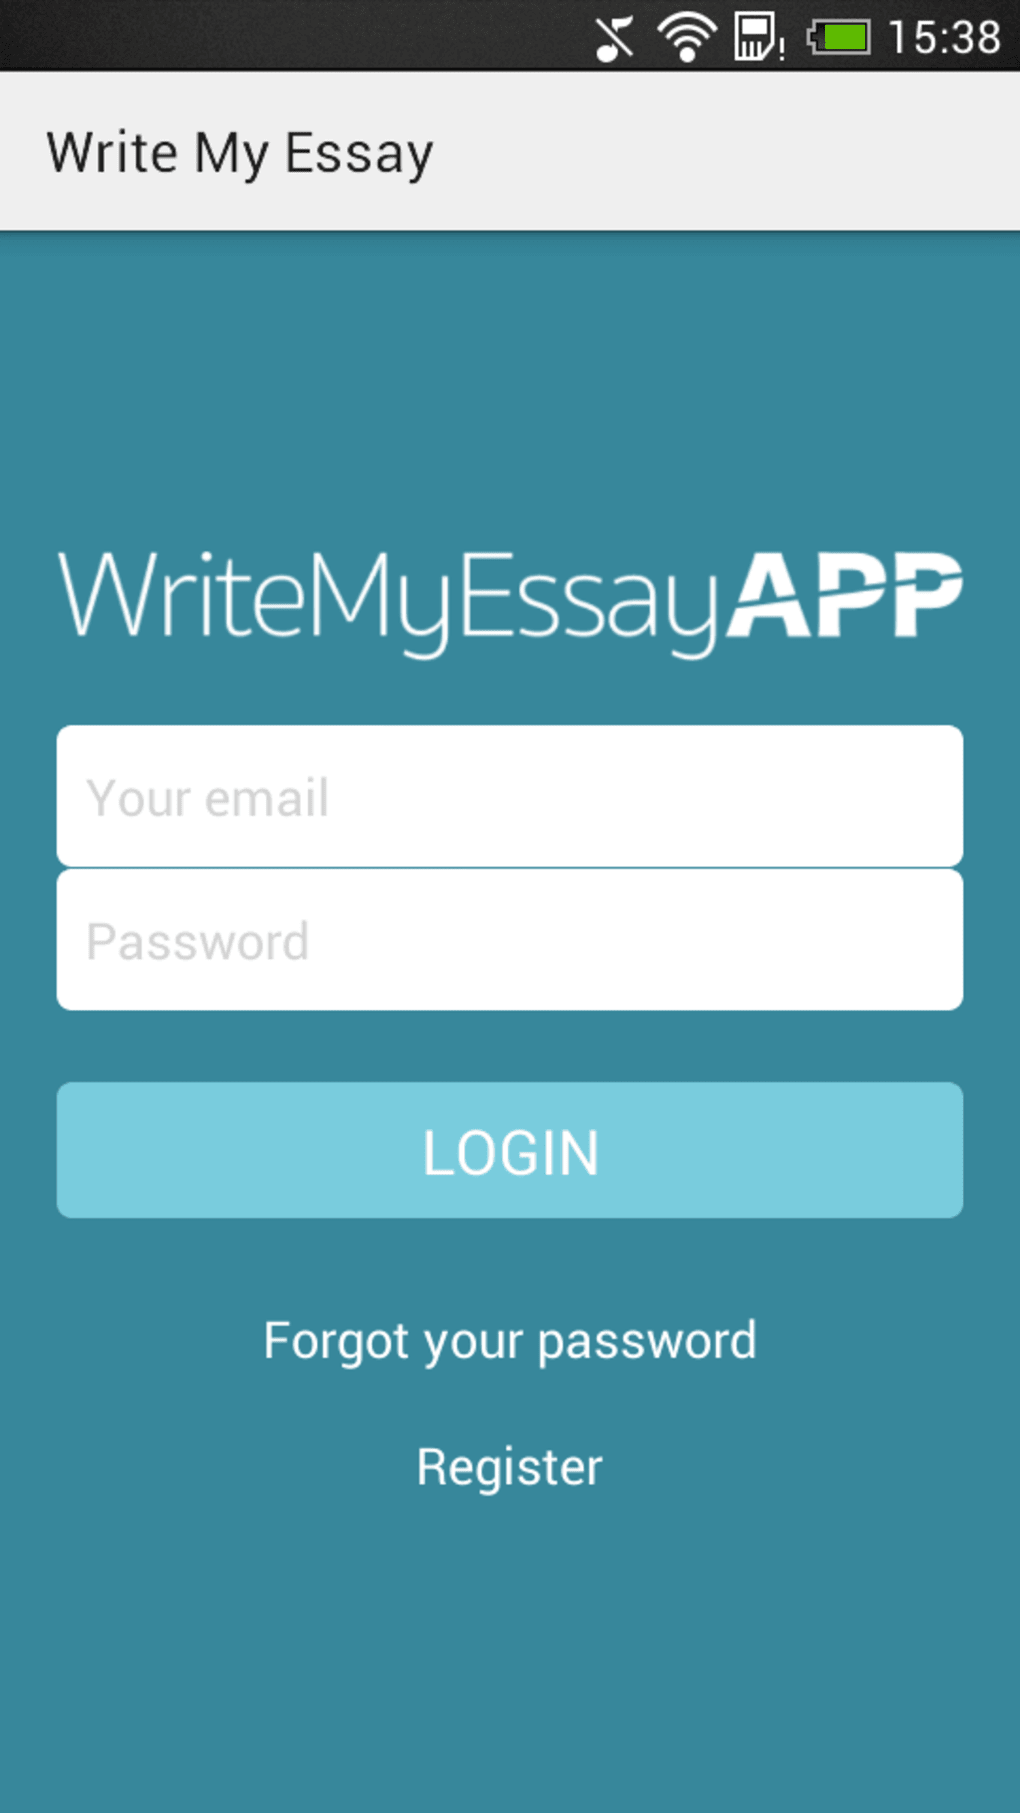 is essay app free